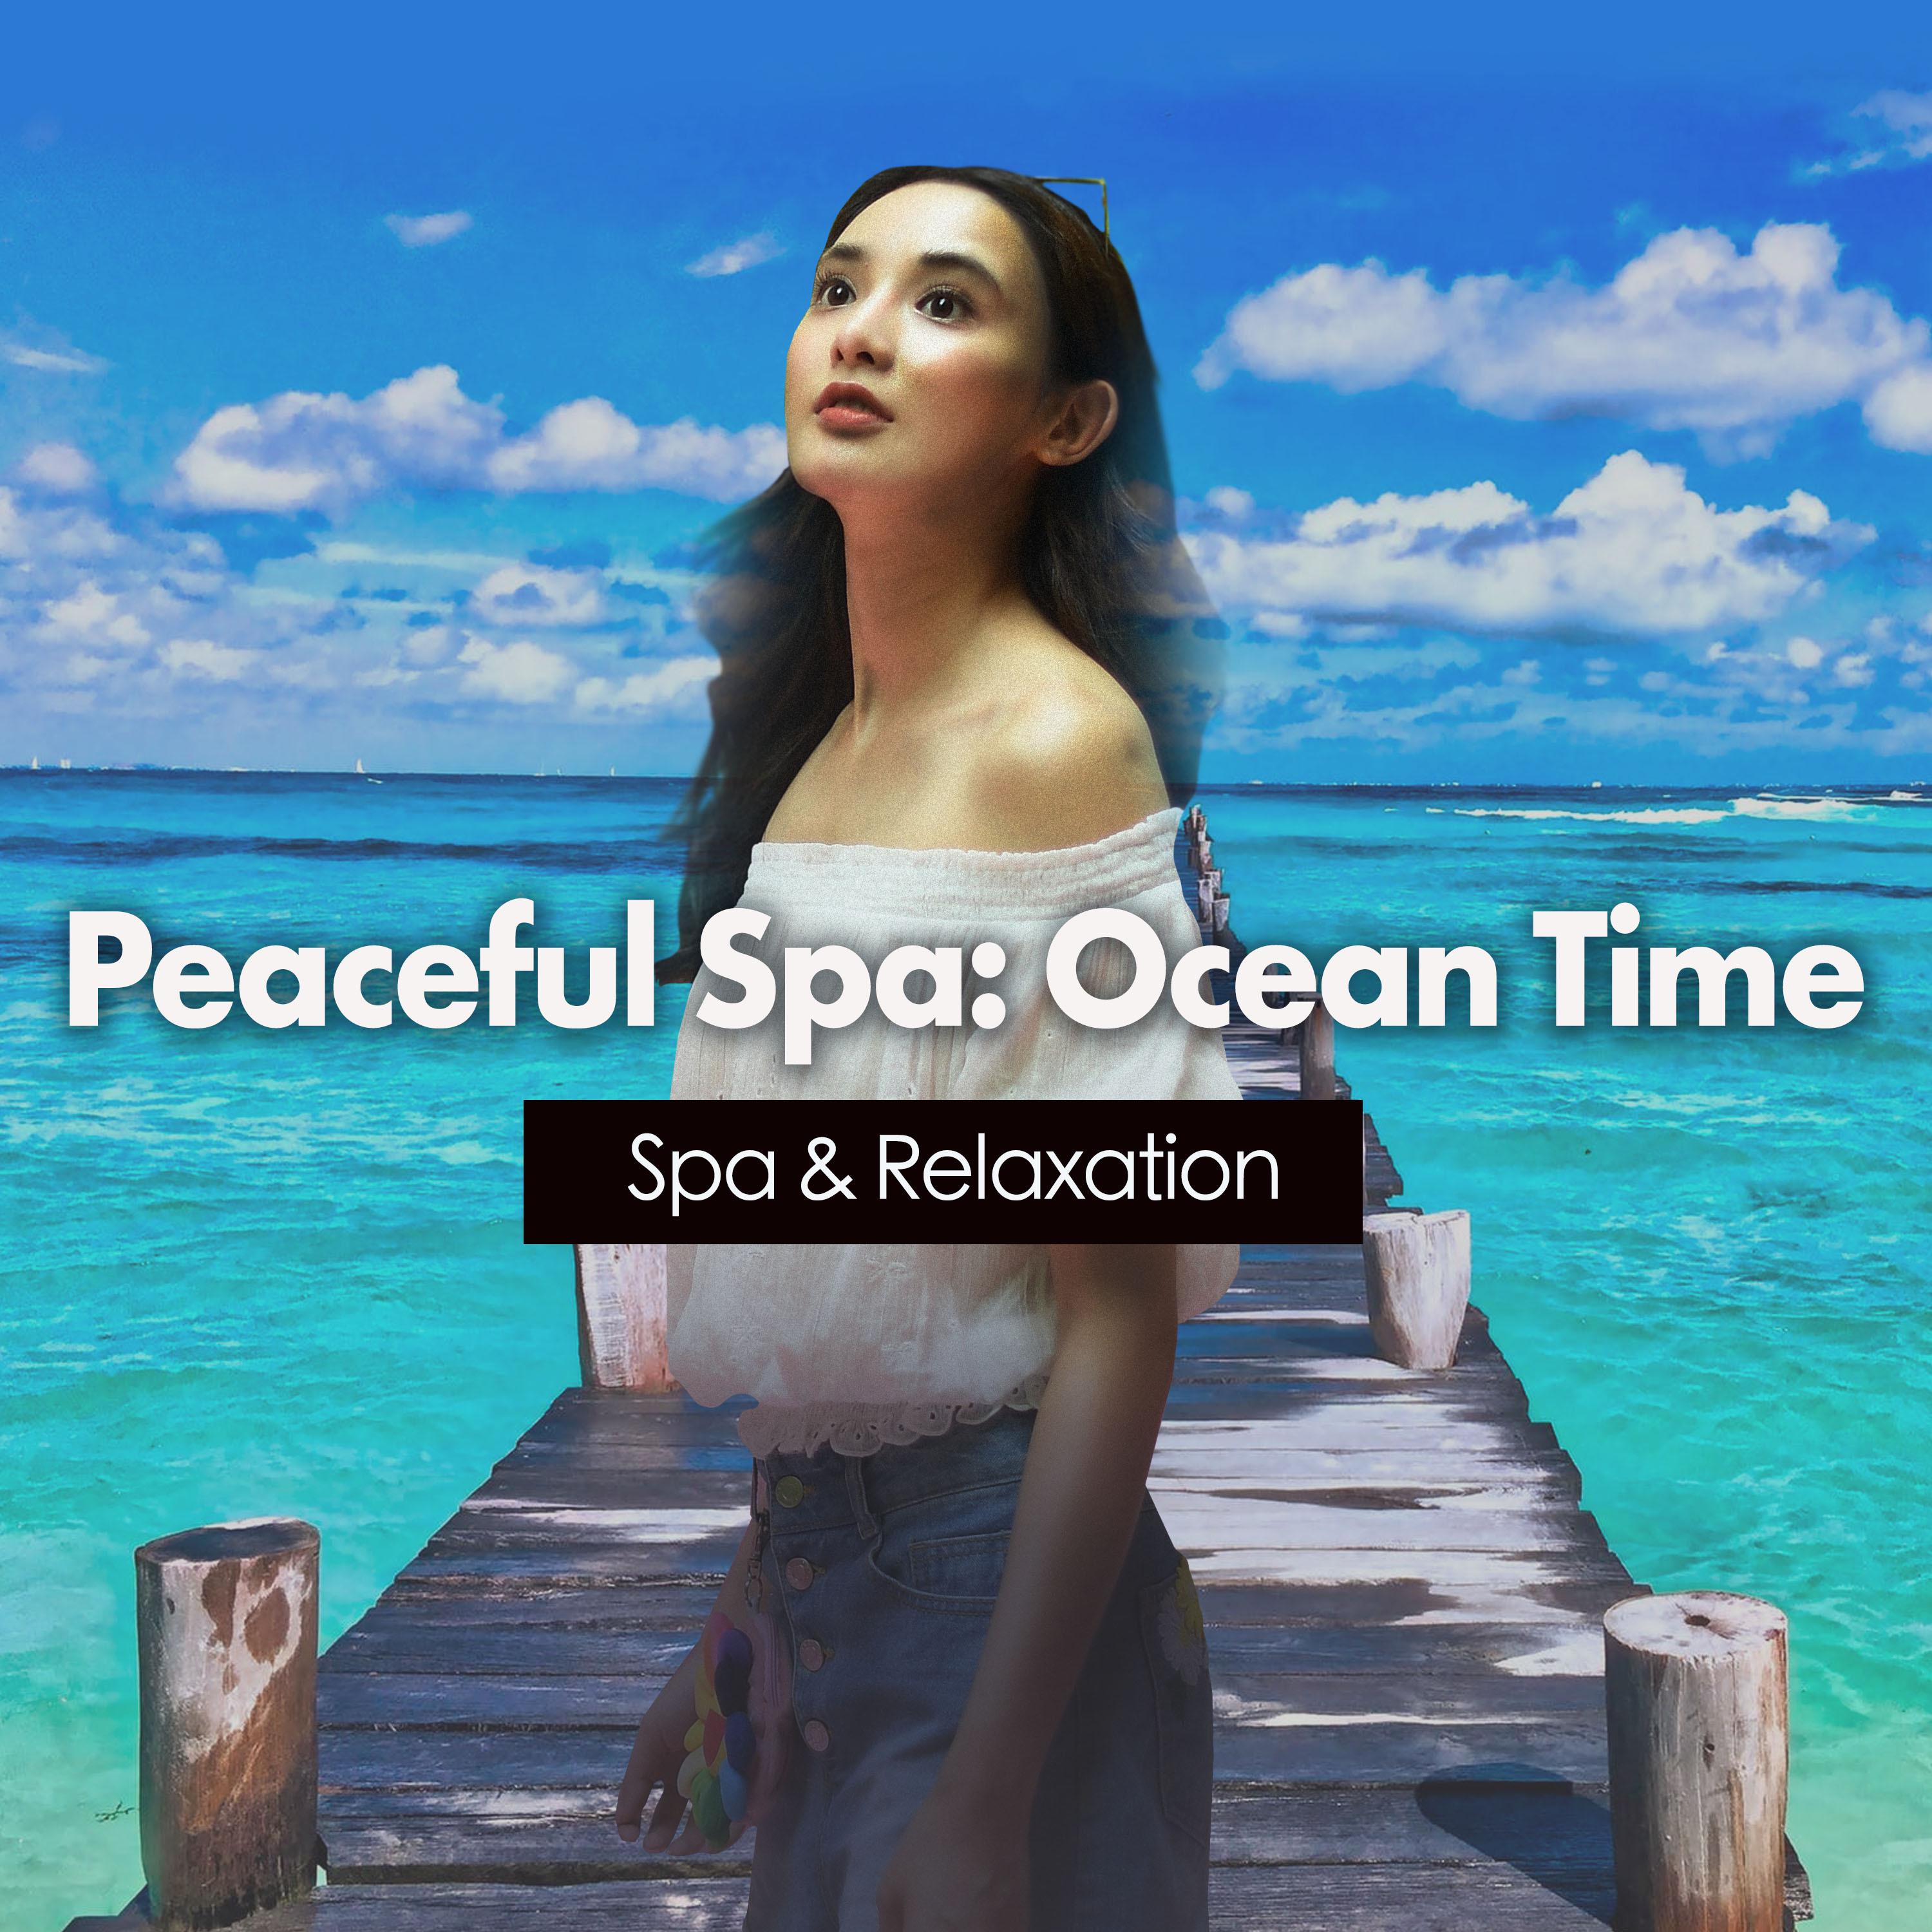 Peaceful Spa: Ocean Time